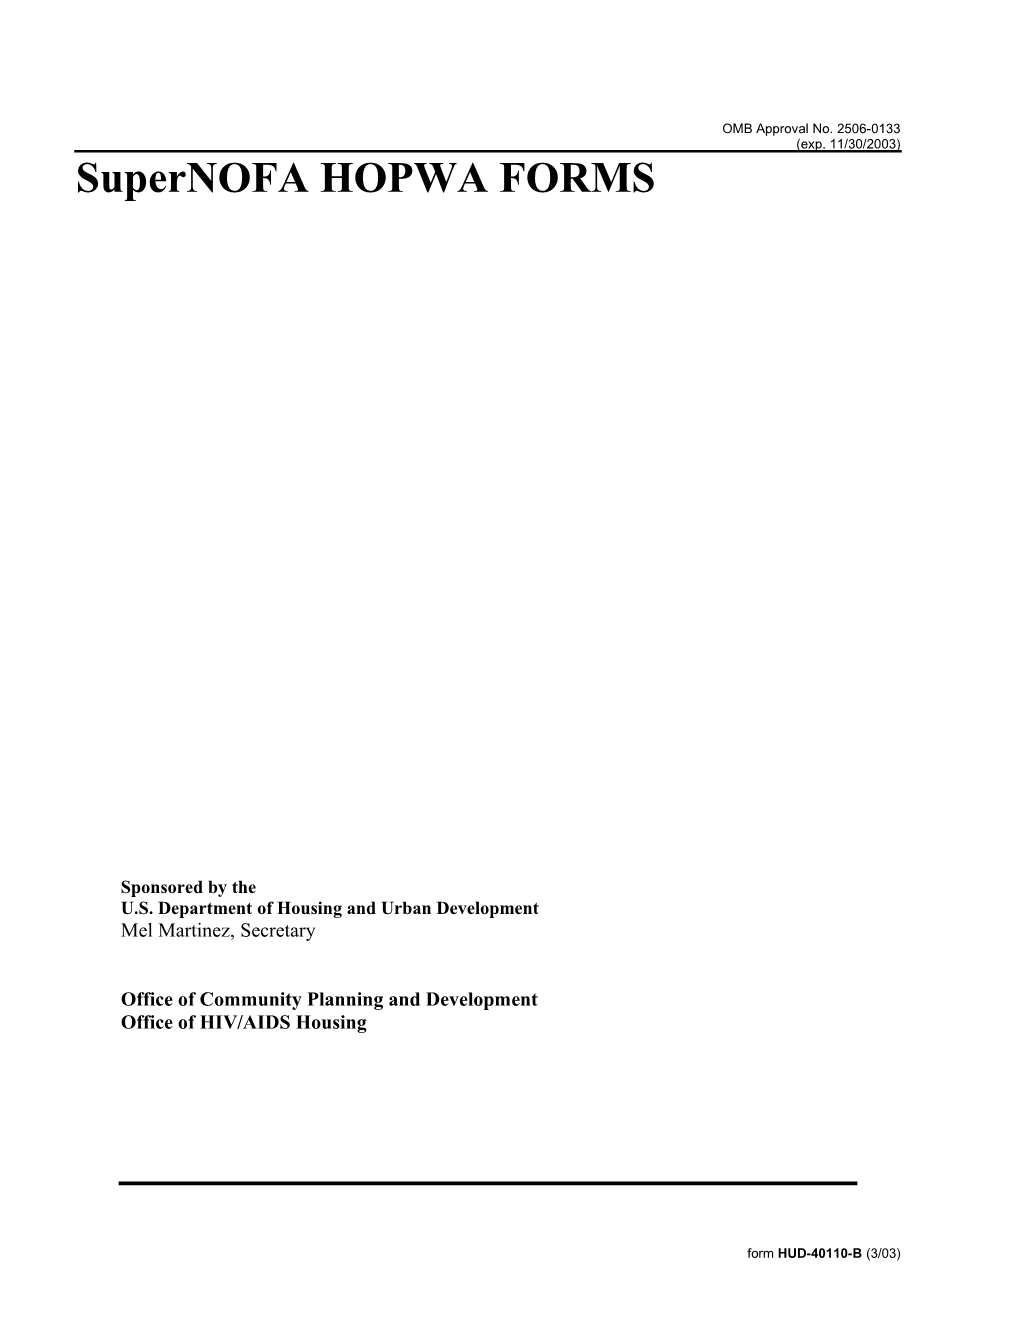 HOPWA Project Budget Form